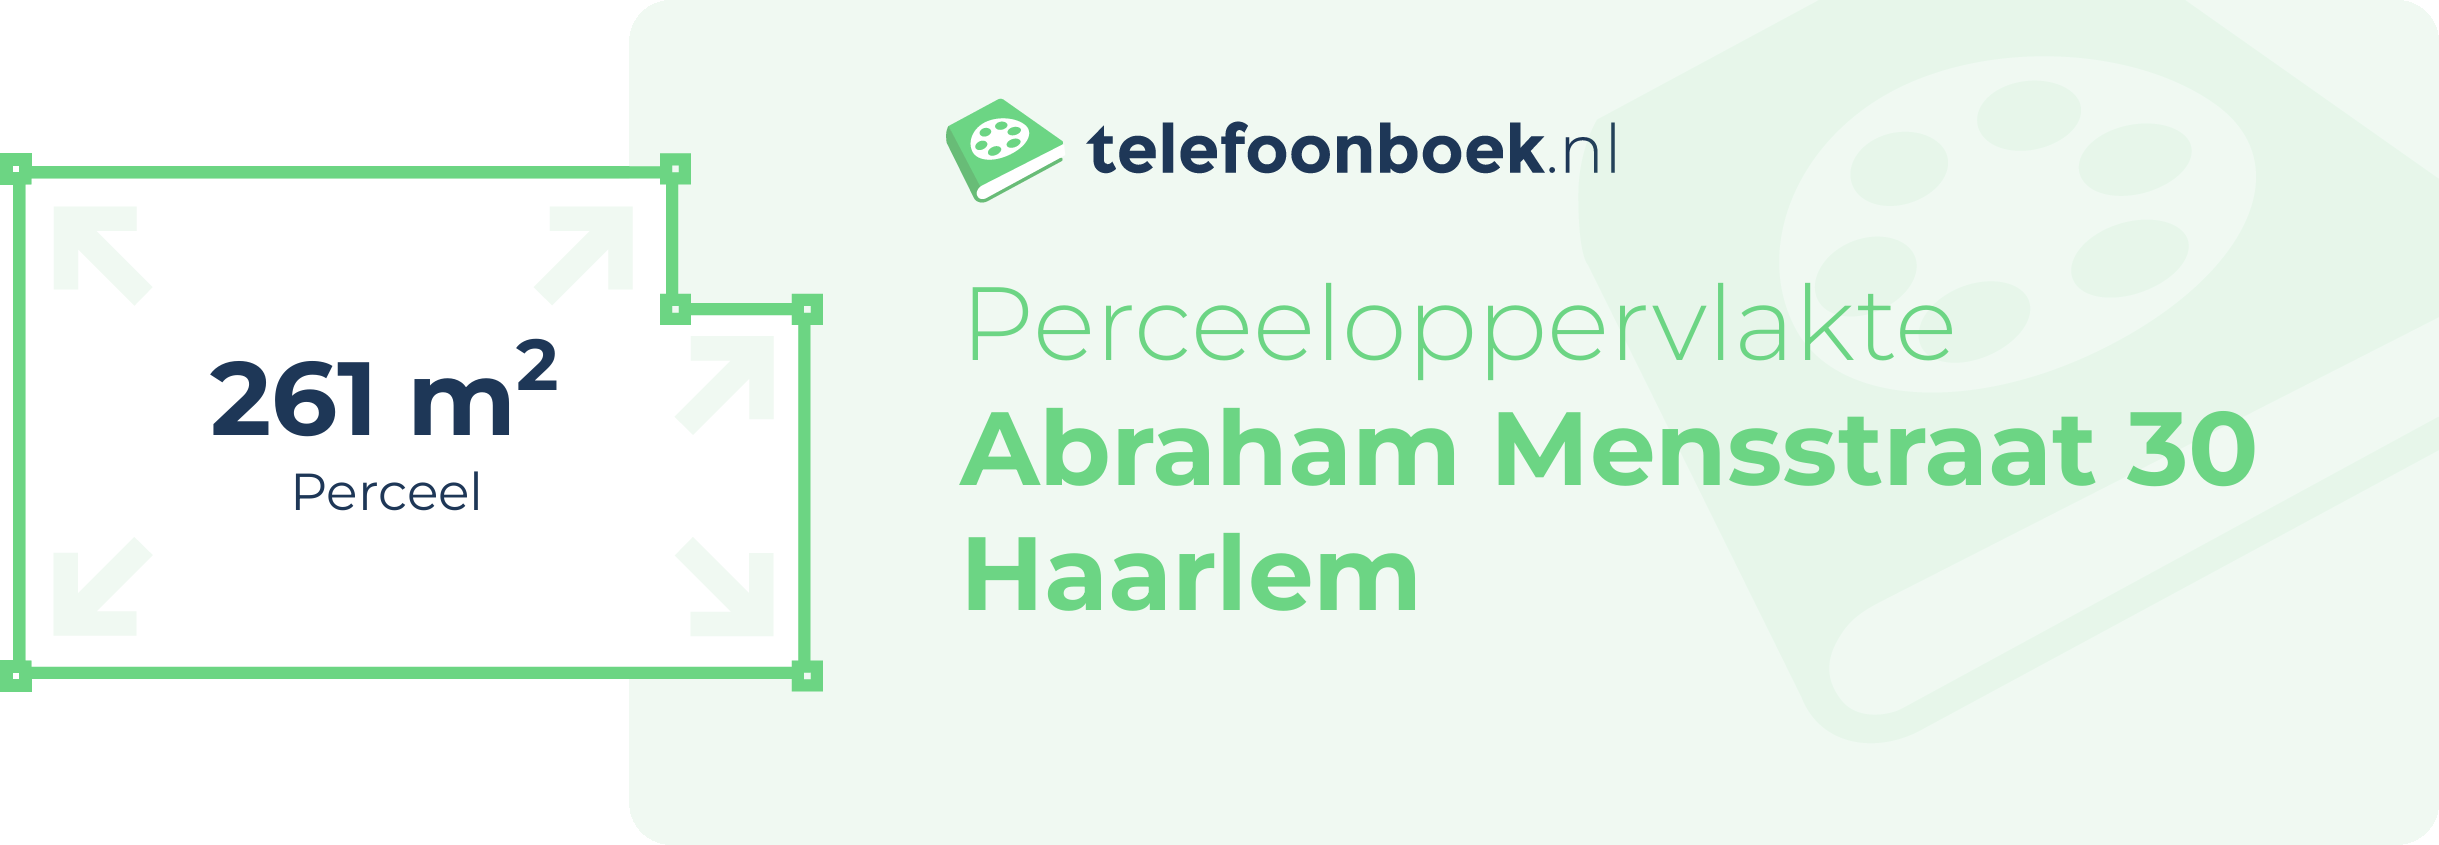 Perceeloppervlakte Abraham Mensstraat 30 Haarlem